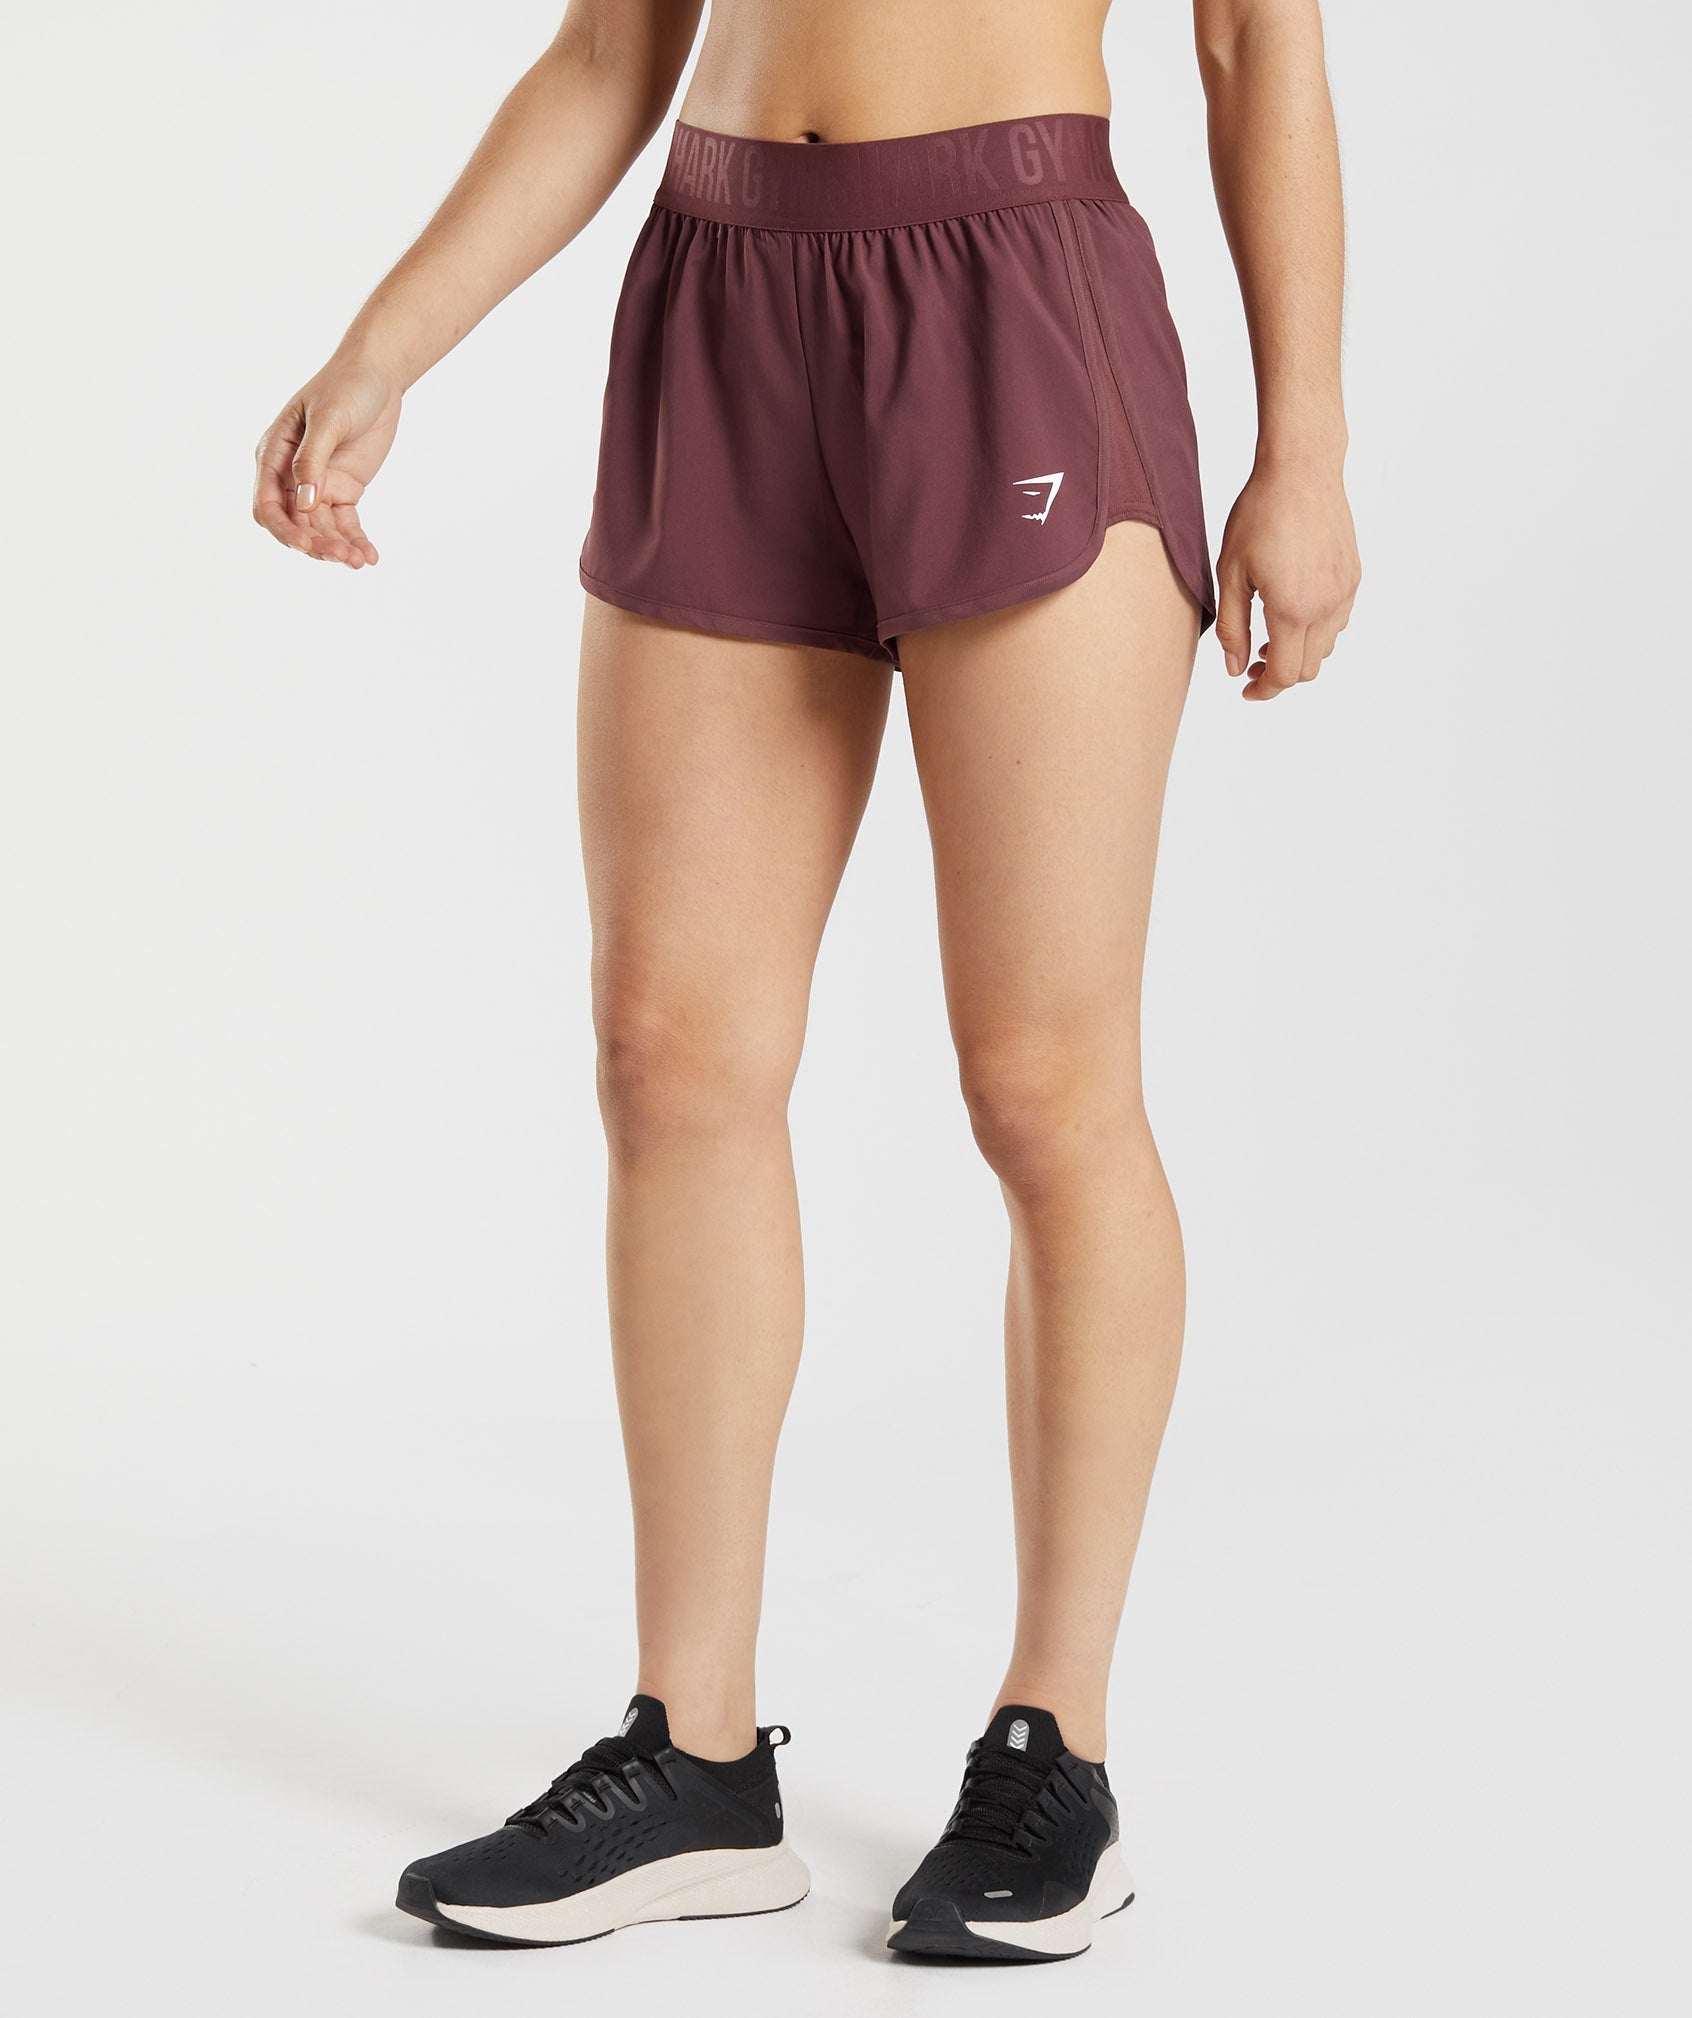 Gymshark Sport Loose Shorts - Apricot Orange  Gym shorts womens, Loose  shorts, Breathable fabric